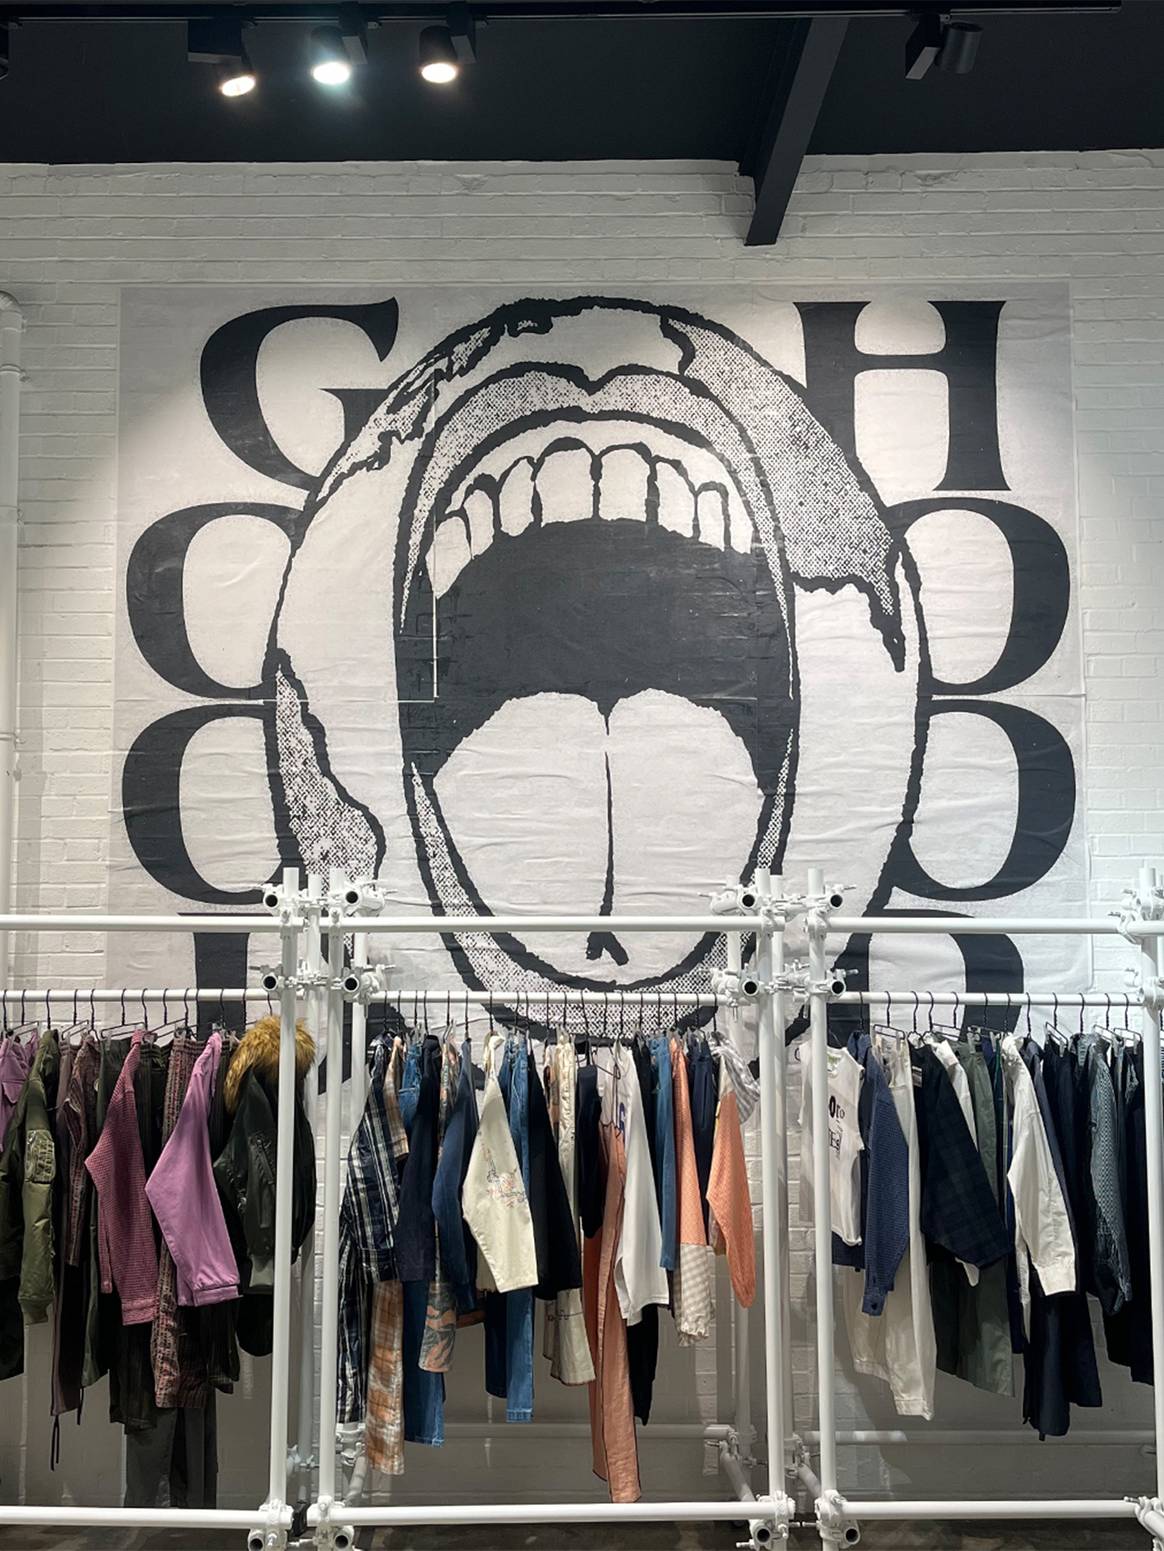 Goodhood store at 15 Hanbury Street, London